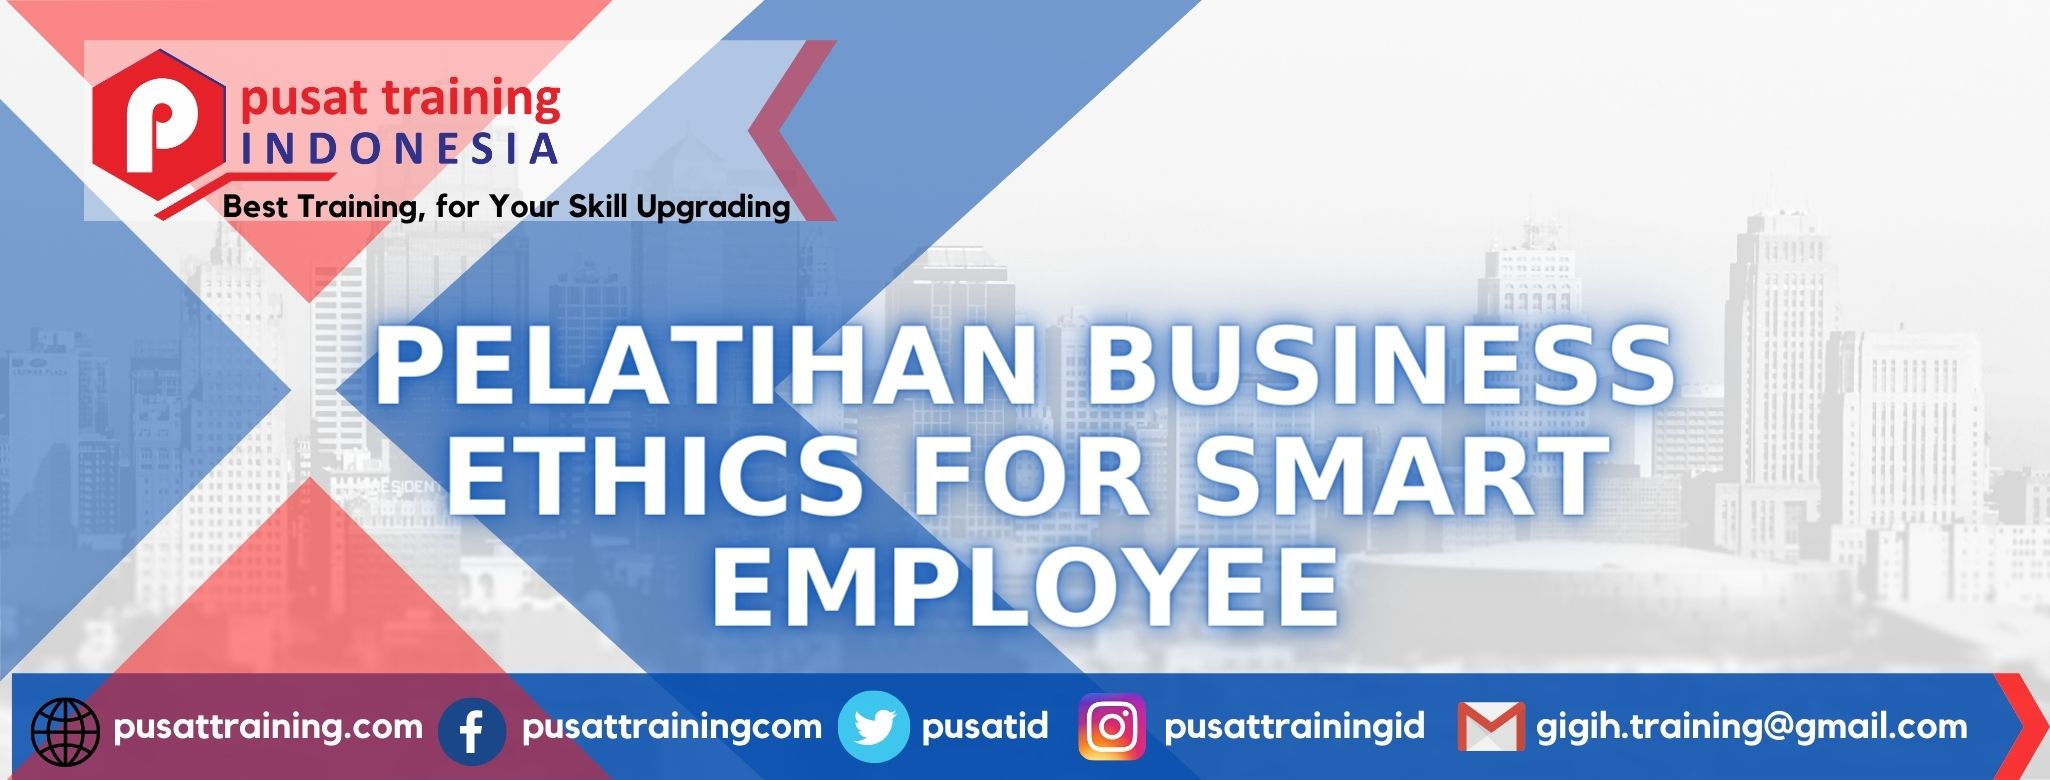 pelatihan-business-ethics-for-smart-employee